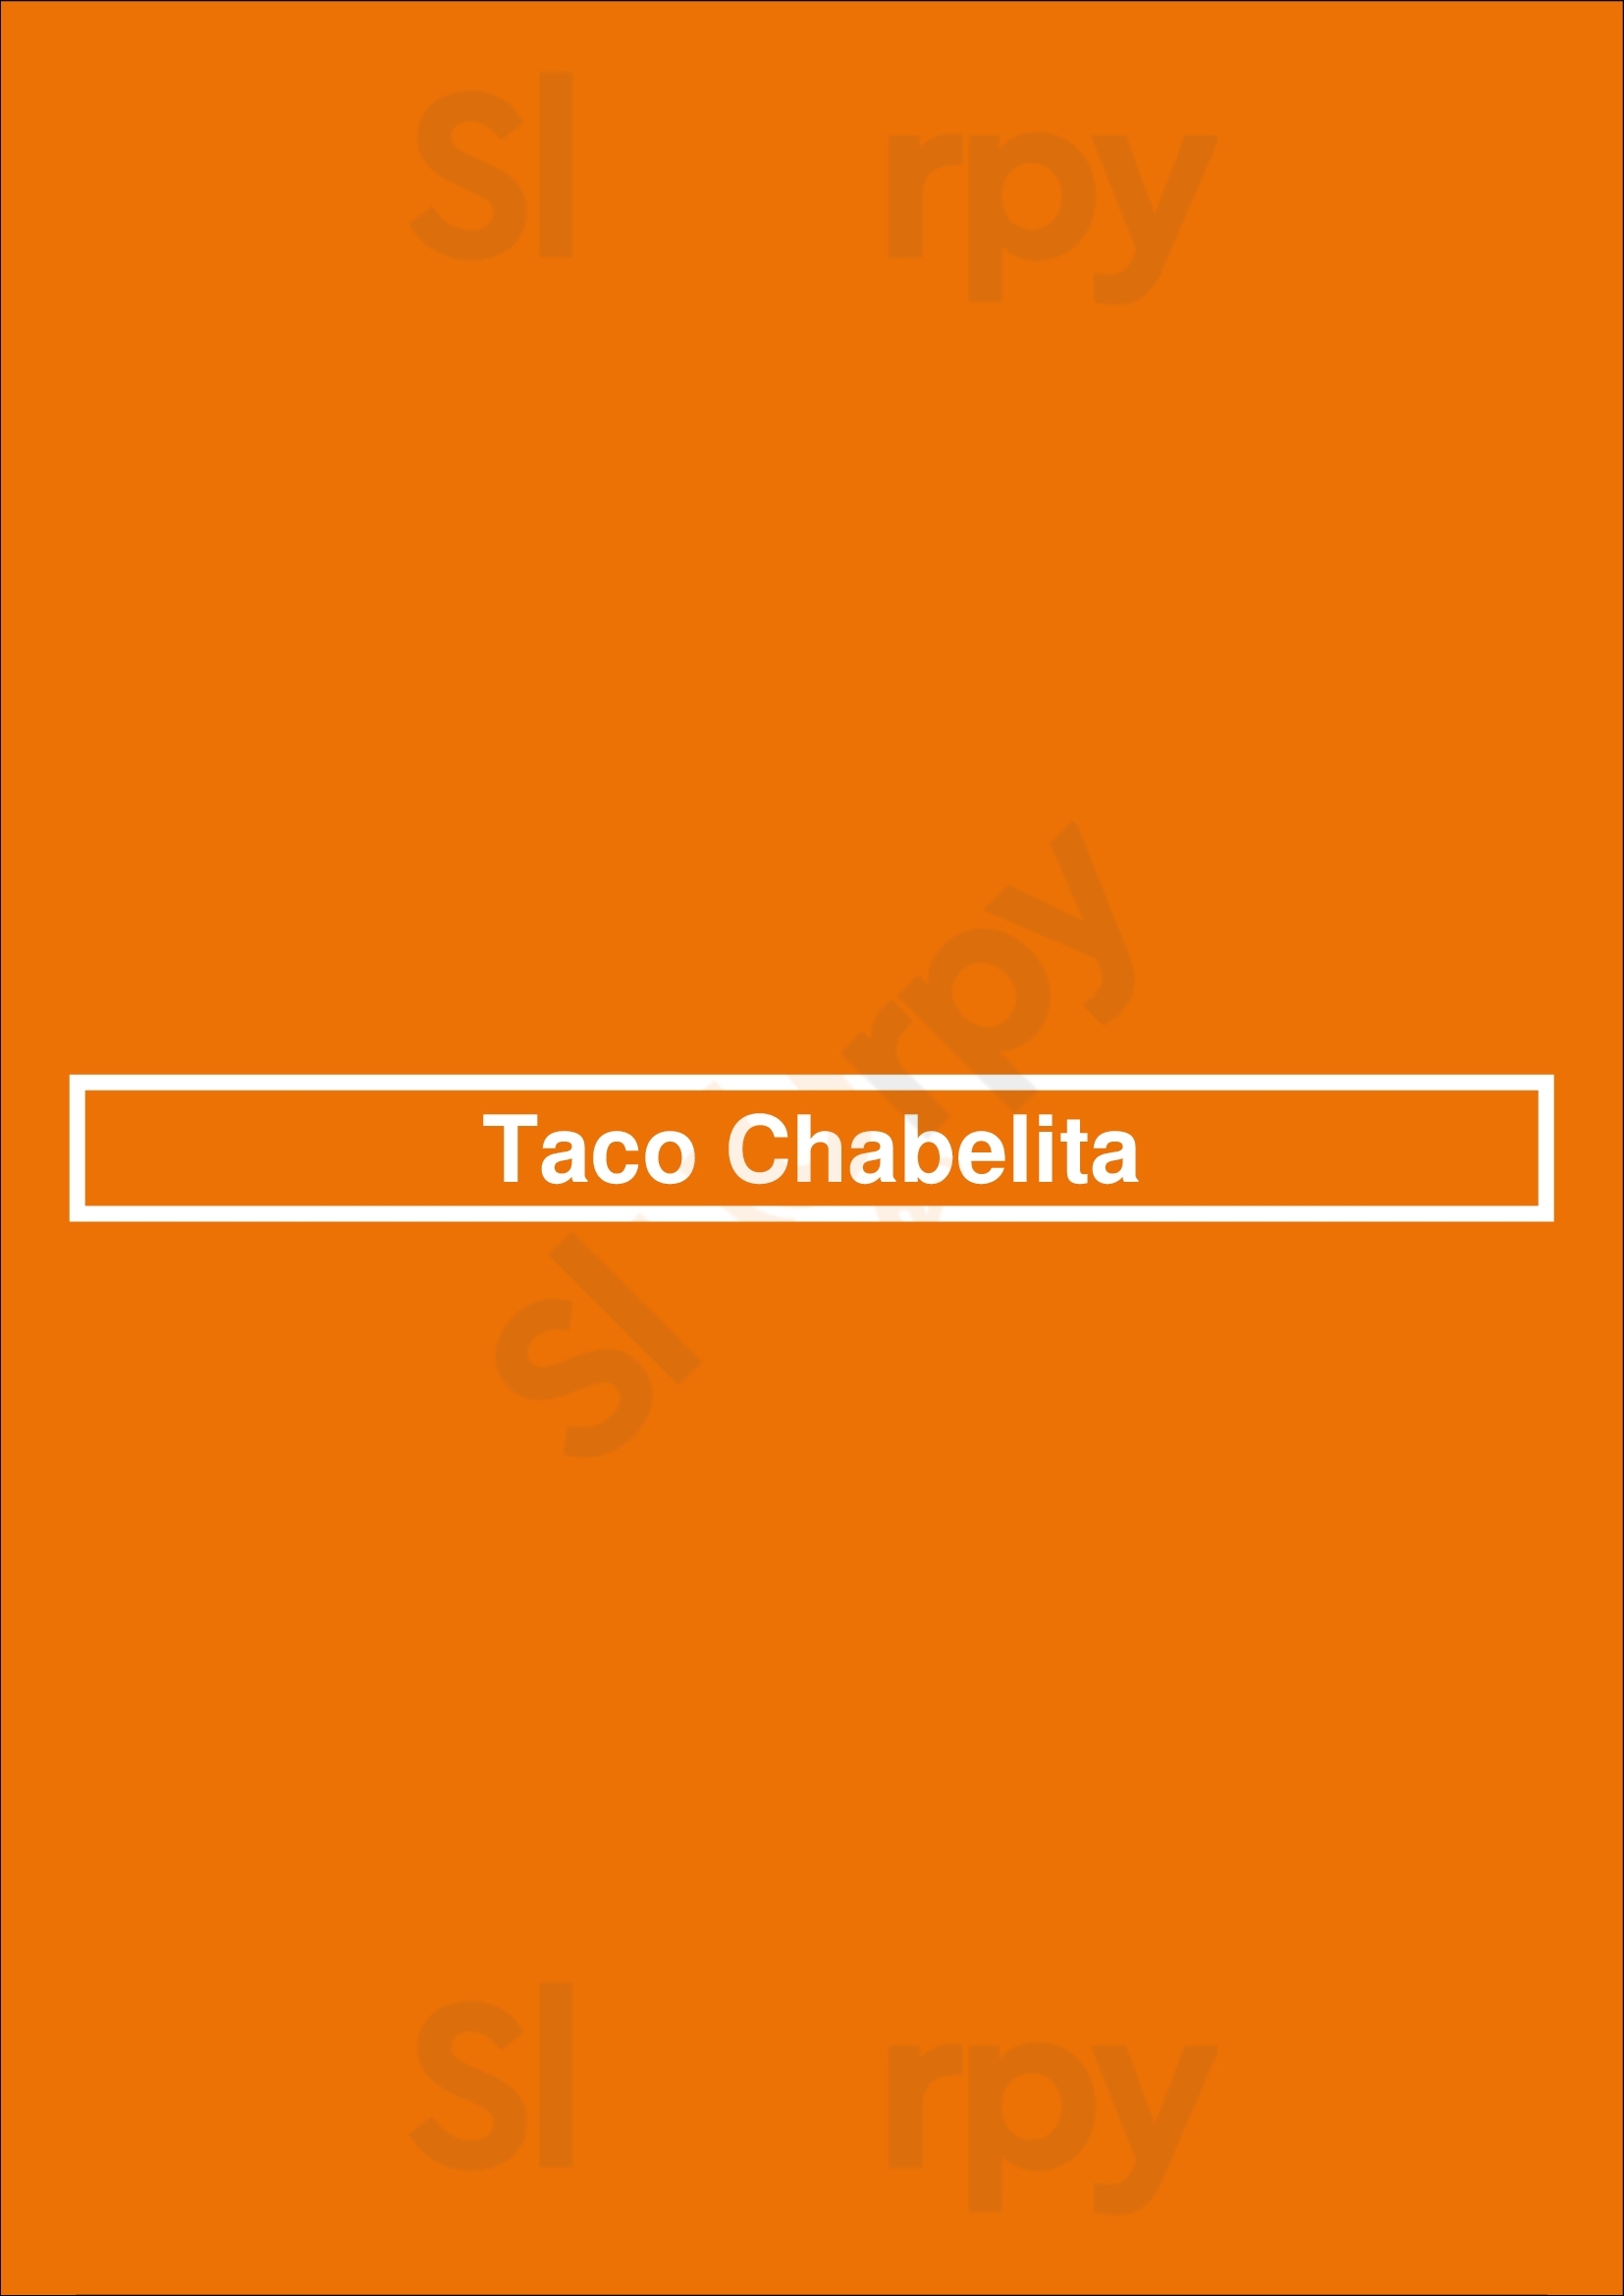 Taco Chabelita Los Angeles Menu - 1